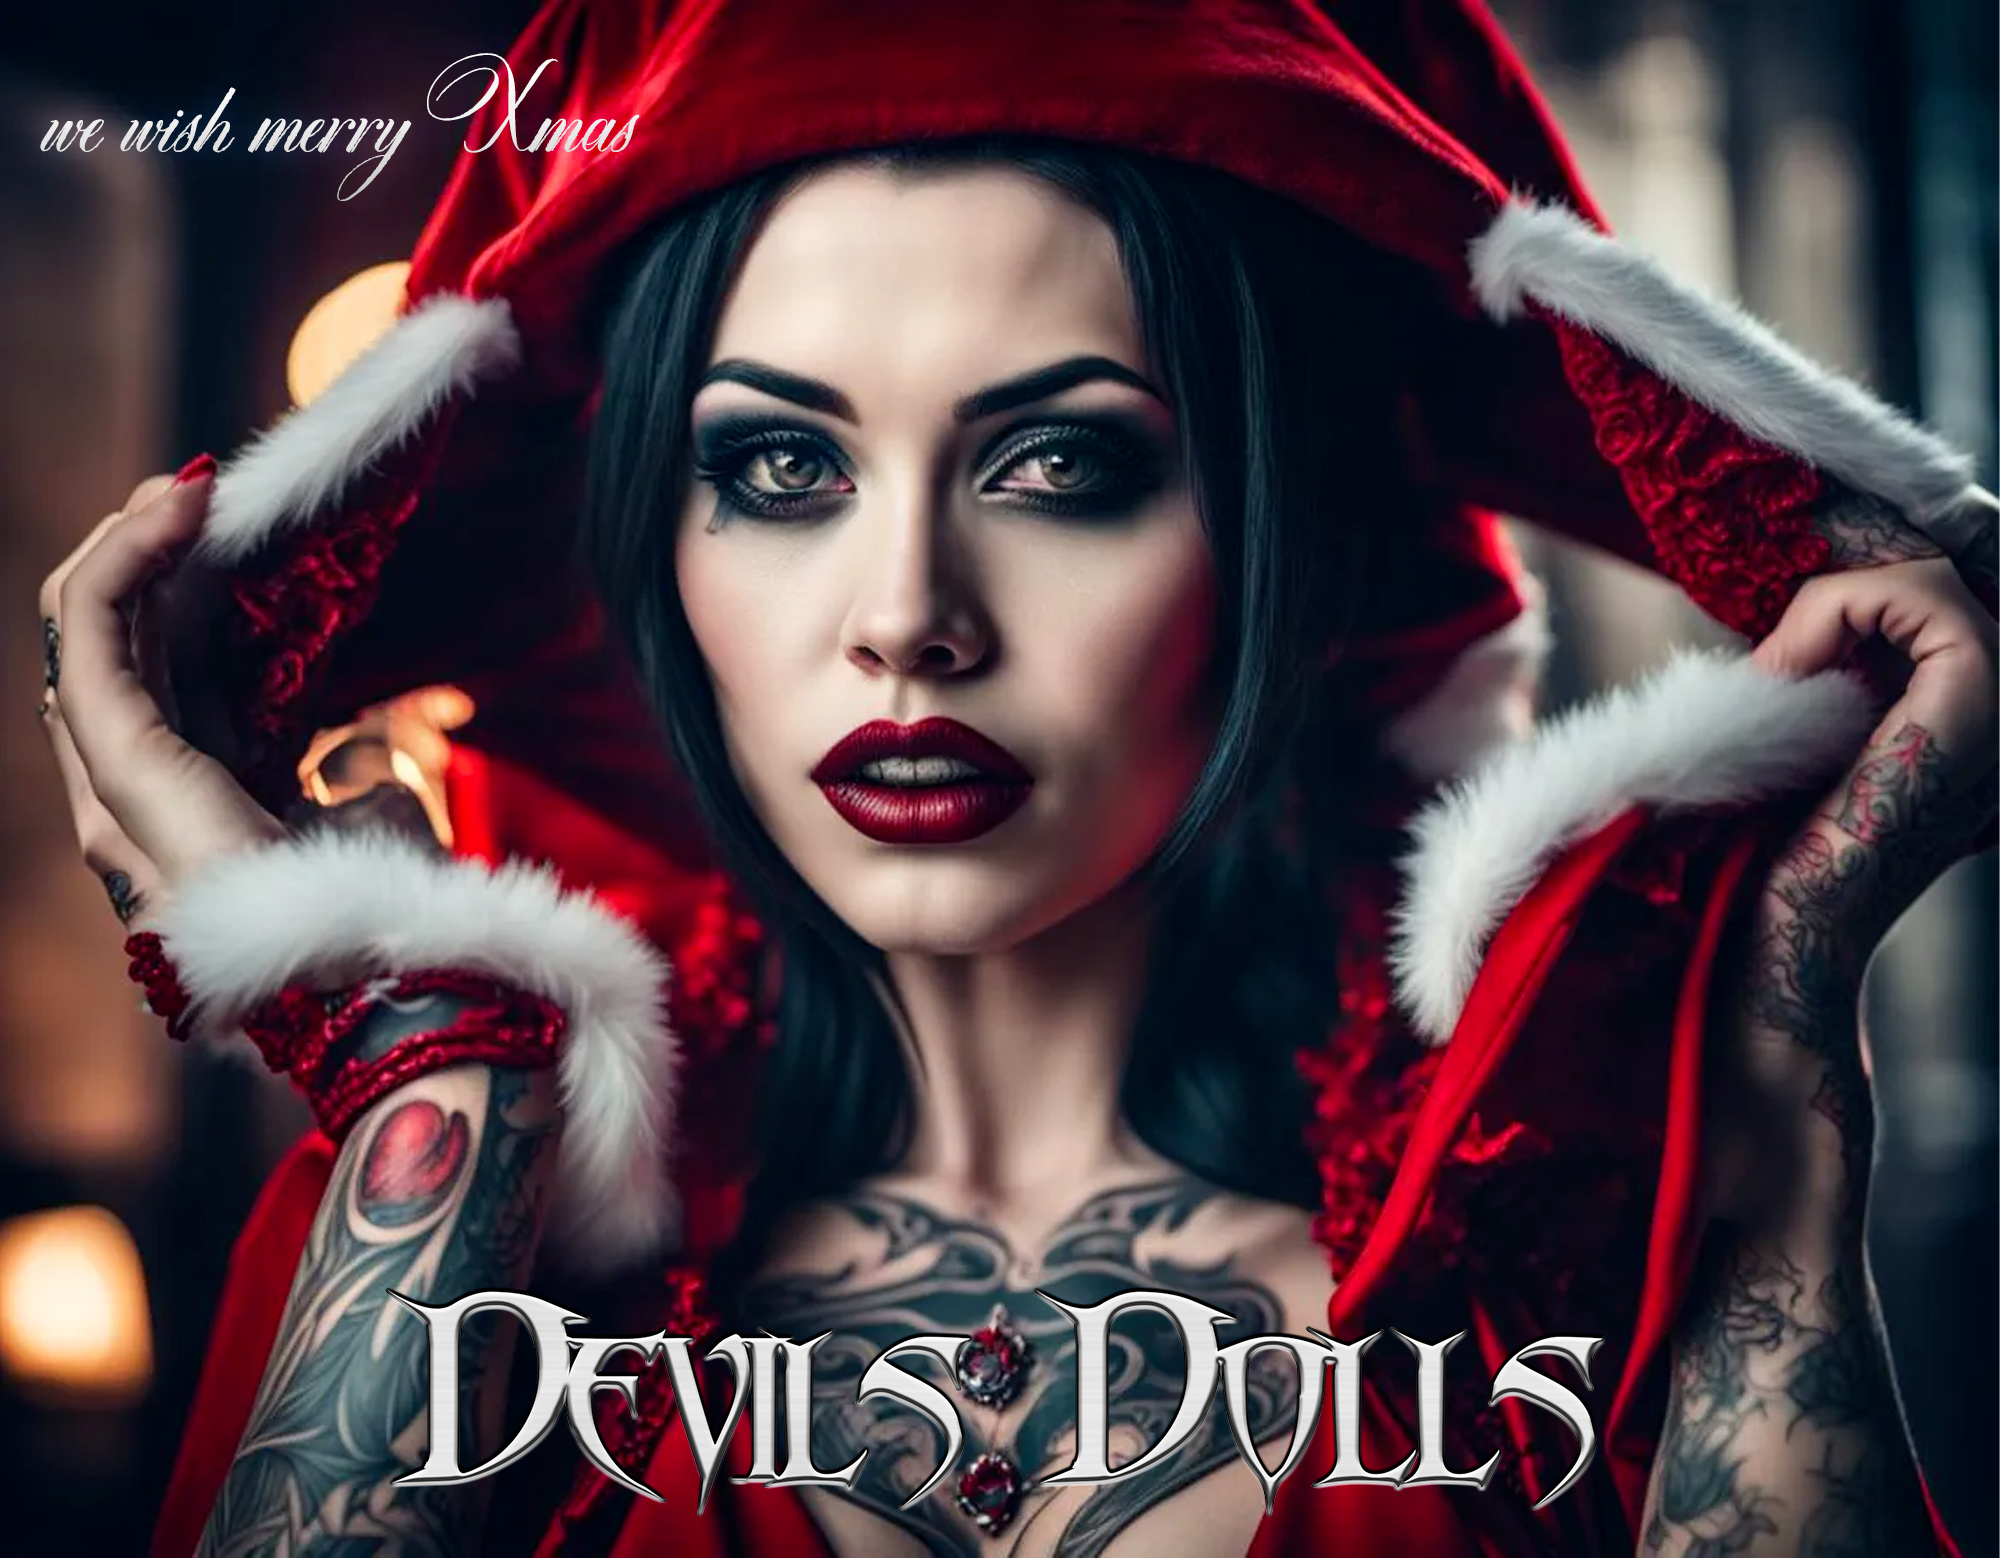 Devils Dolls Devils Dolls Commmunity Blog We Wish You Merry X Mas